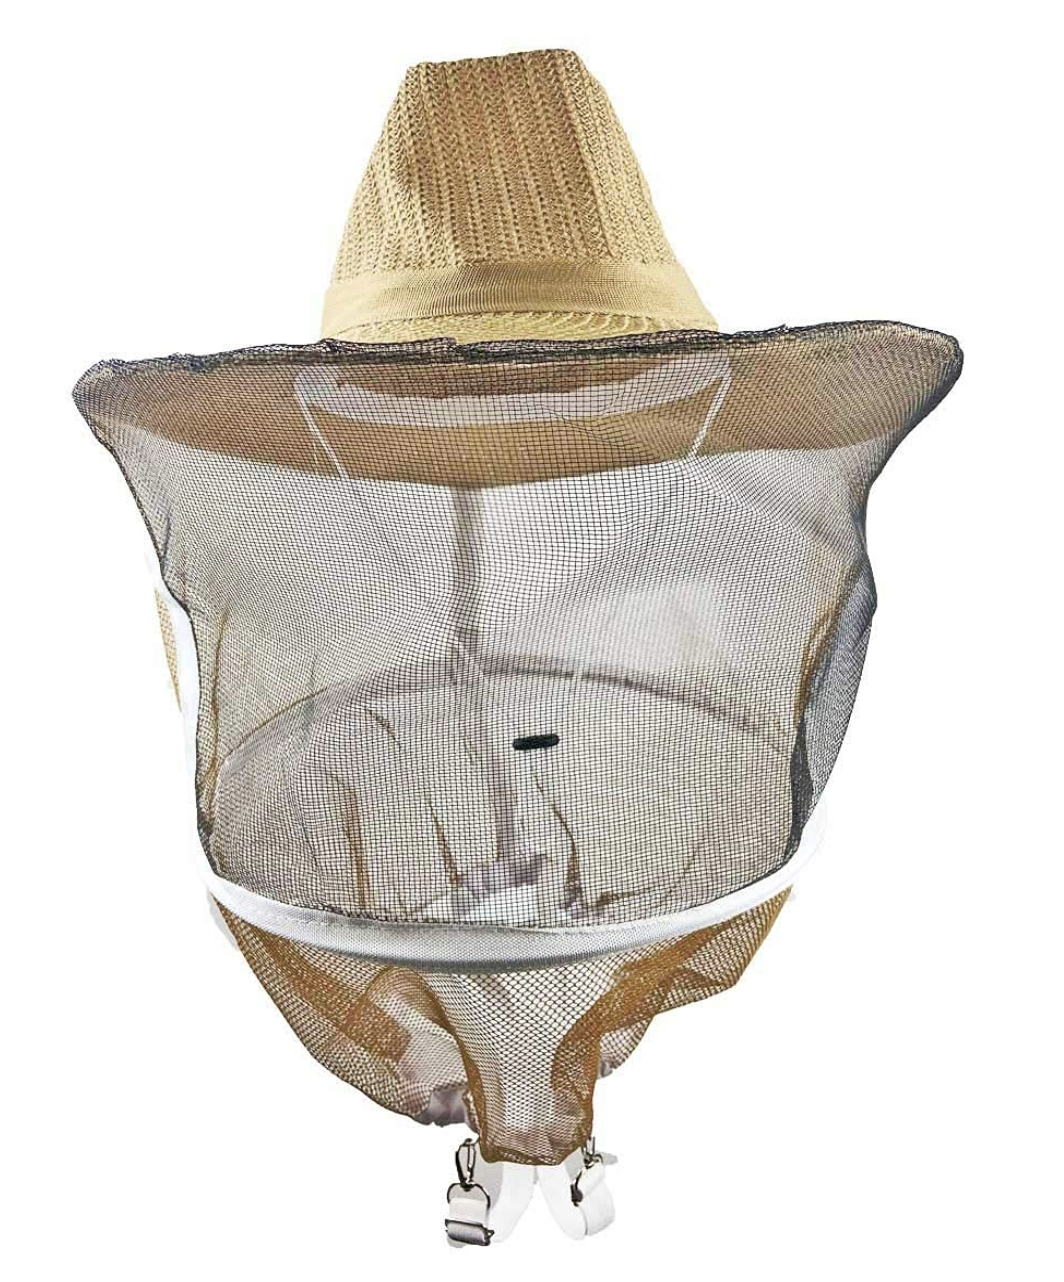 Beekeeper Veil for Beekeep Cowboy Hat Style